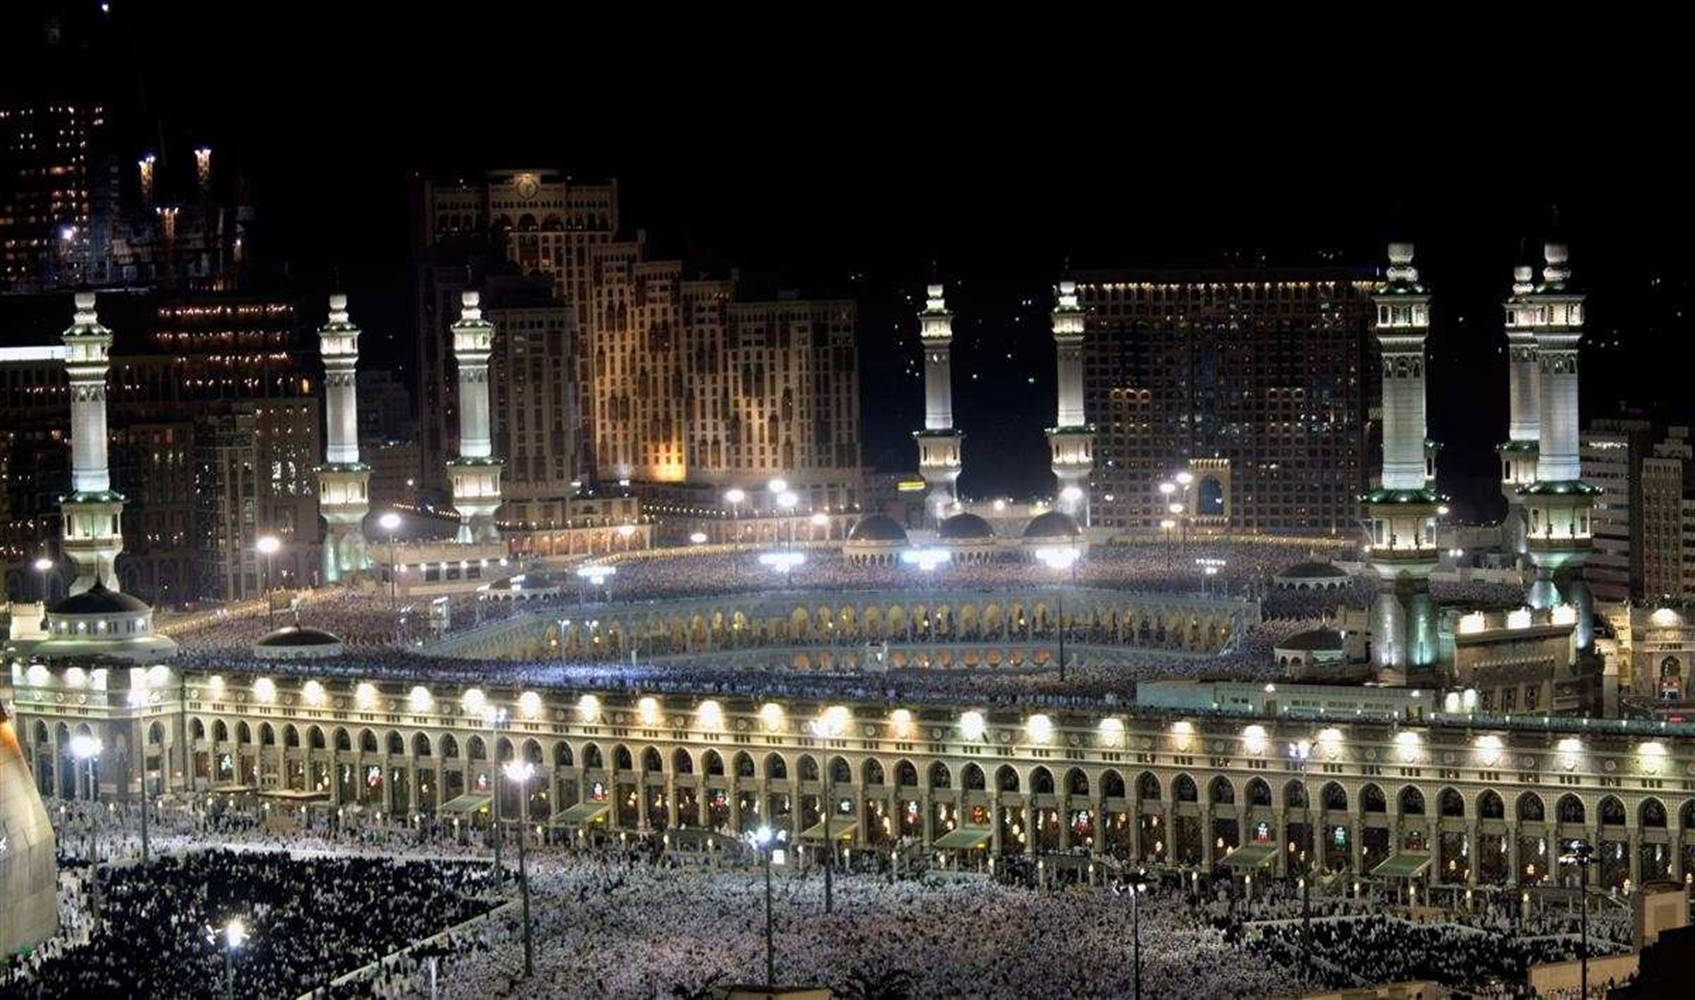 Großemoschee Bei Nacht In Mekka Hd Wallpaper